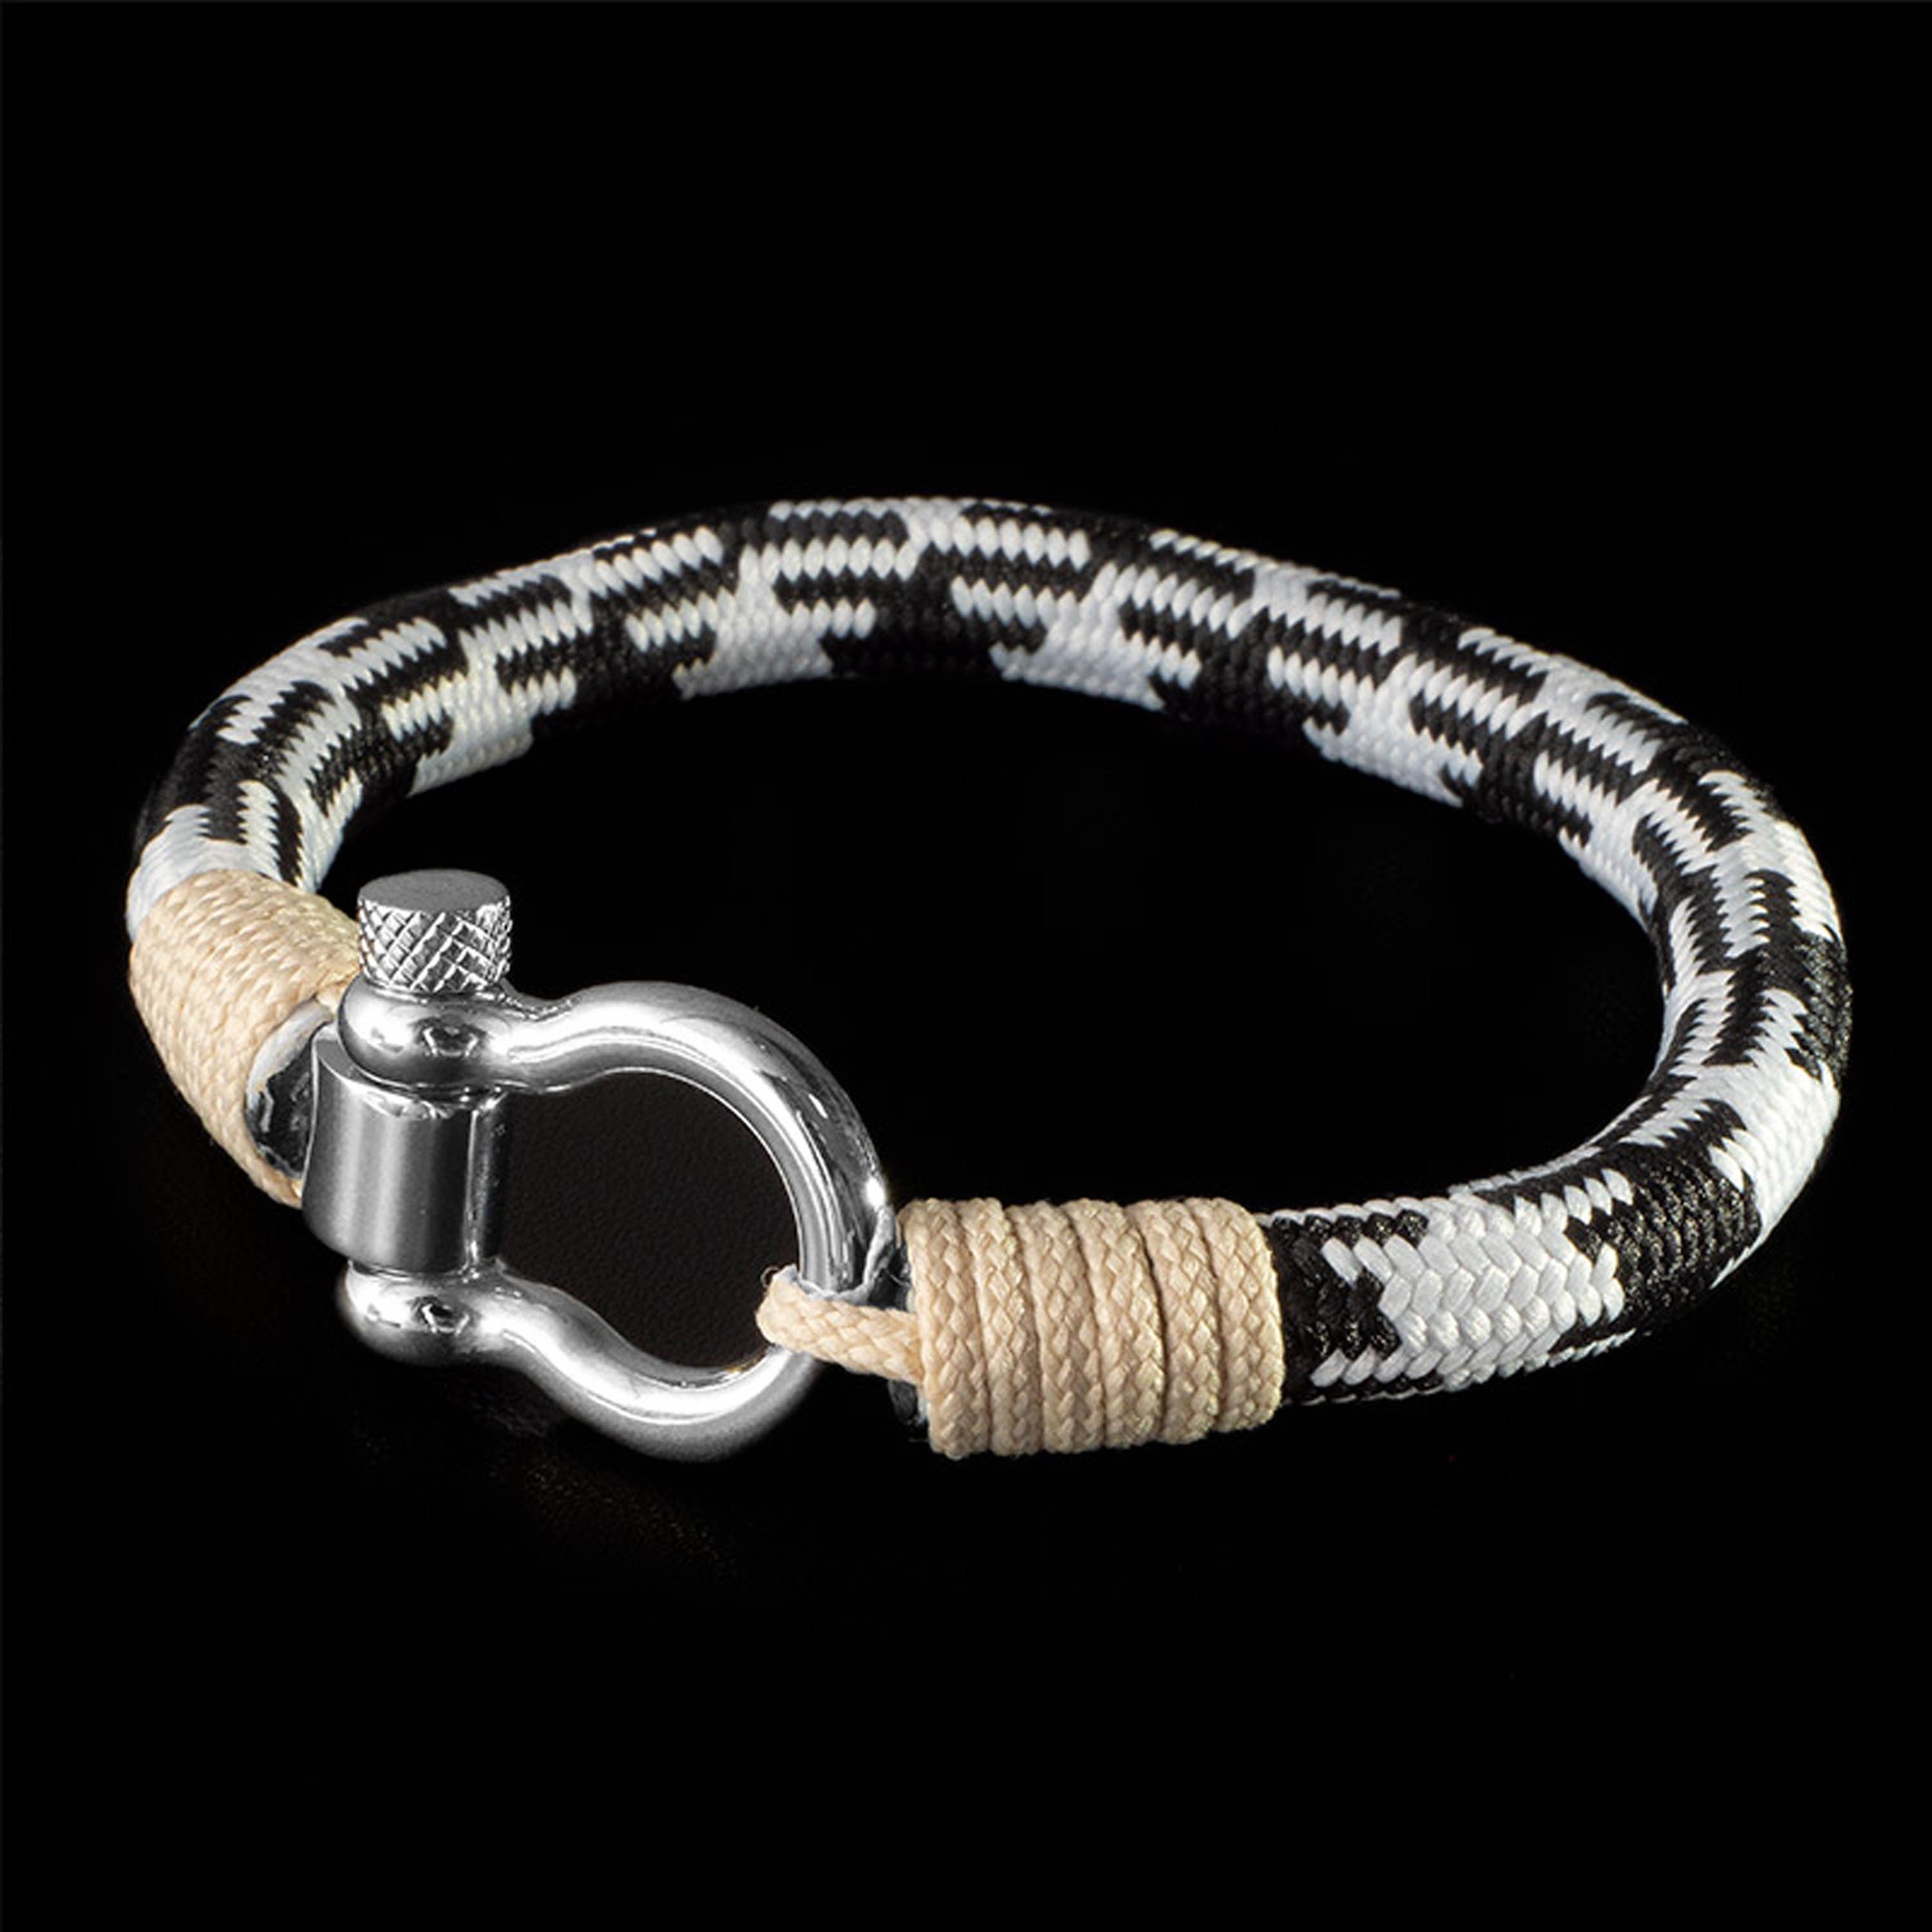 Armband Armband Ebru maritime, Schäckel Segeltau UNIQAL.de Style, (Edelstahl, Casual Maritime "OCEAN" Segeltau, handgefertigt) aus nautics,